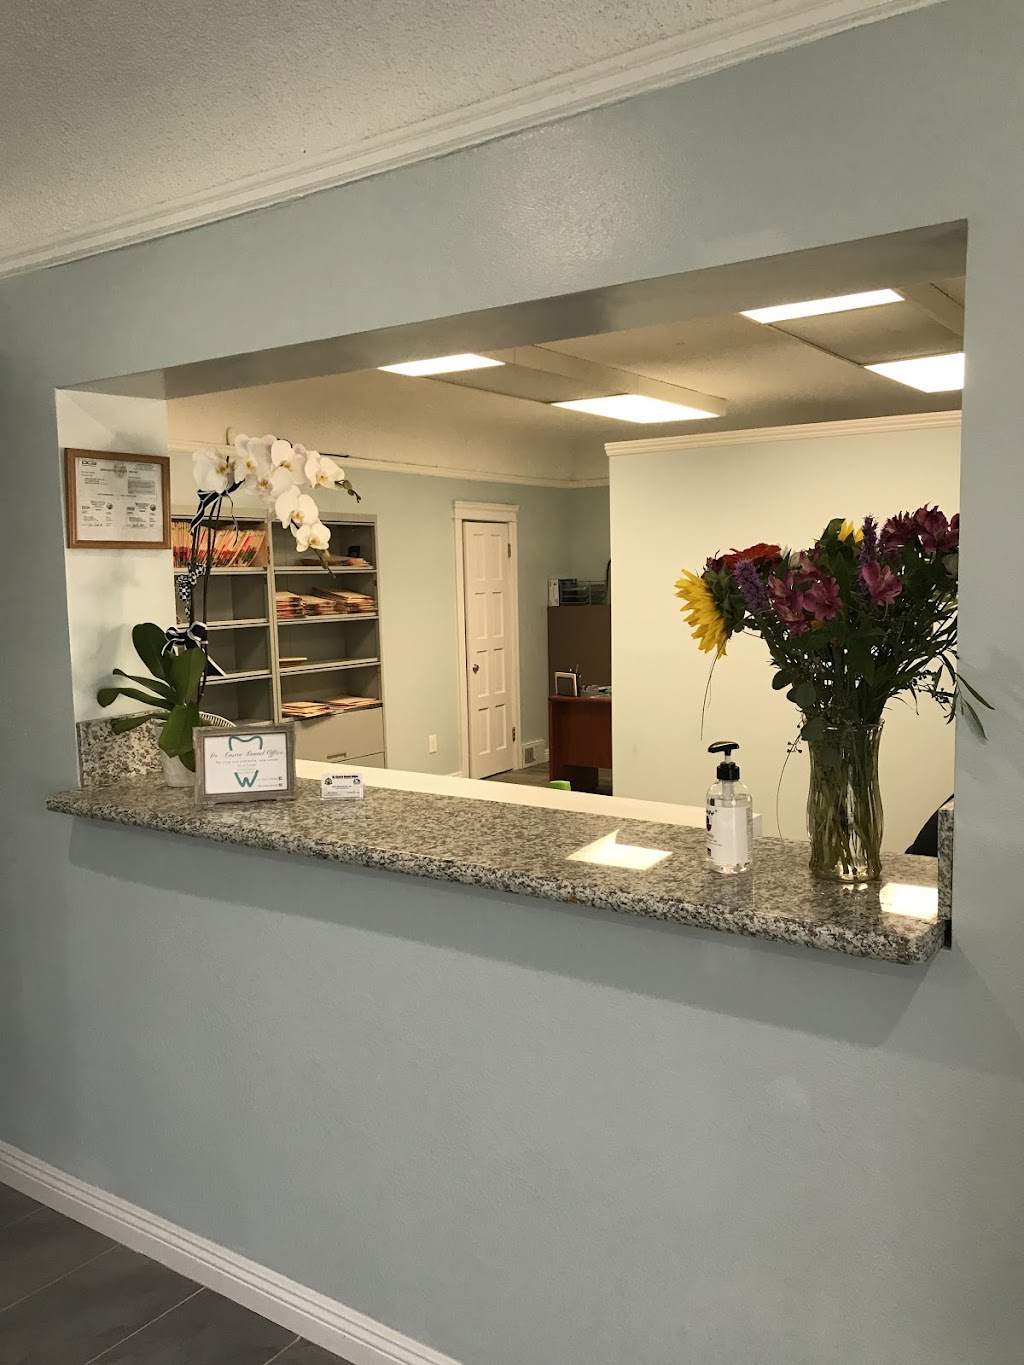 Dr. Castro Dental Office | 1723 Durfee Ave, South El Monte, CA 91733, USA | Phone: (626) 401-3000